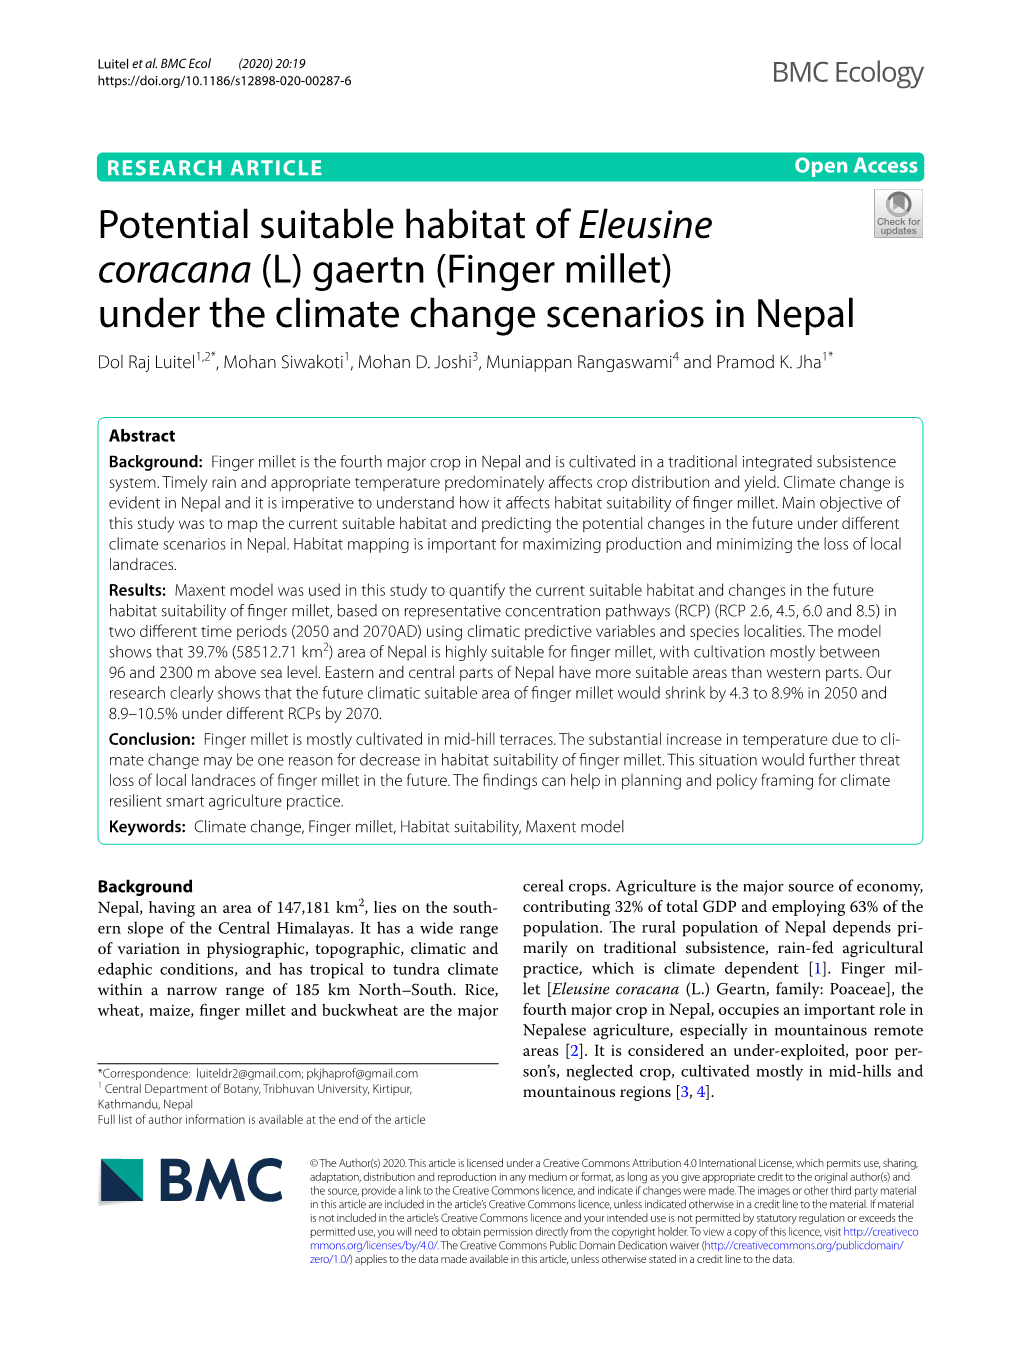 Potential Suitable Habitat of Eleusine Coracana (L) Gaertn (Finger Millet) Under the Climate Change Scenarios in Nepal Dol Raj Luitel1,2*, Mohan Siwakoti1, Mohan D